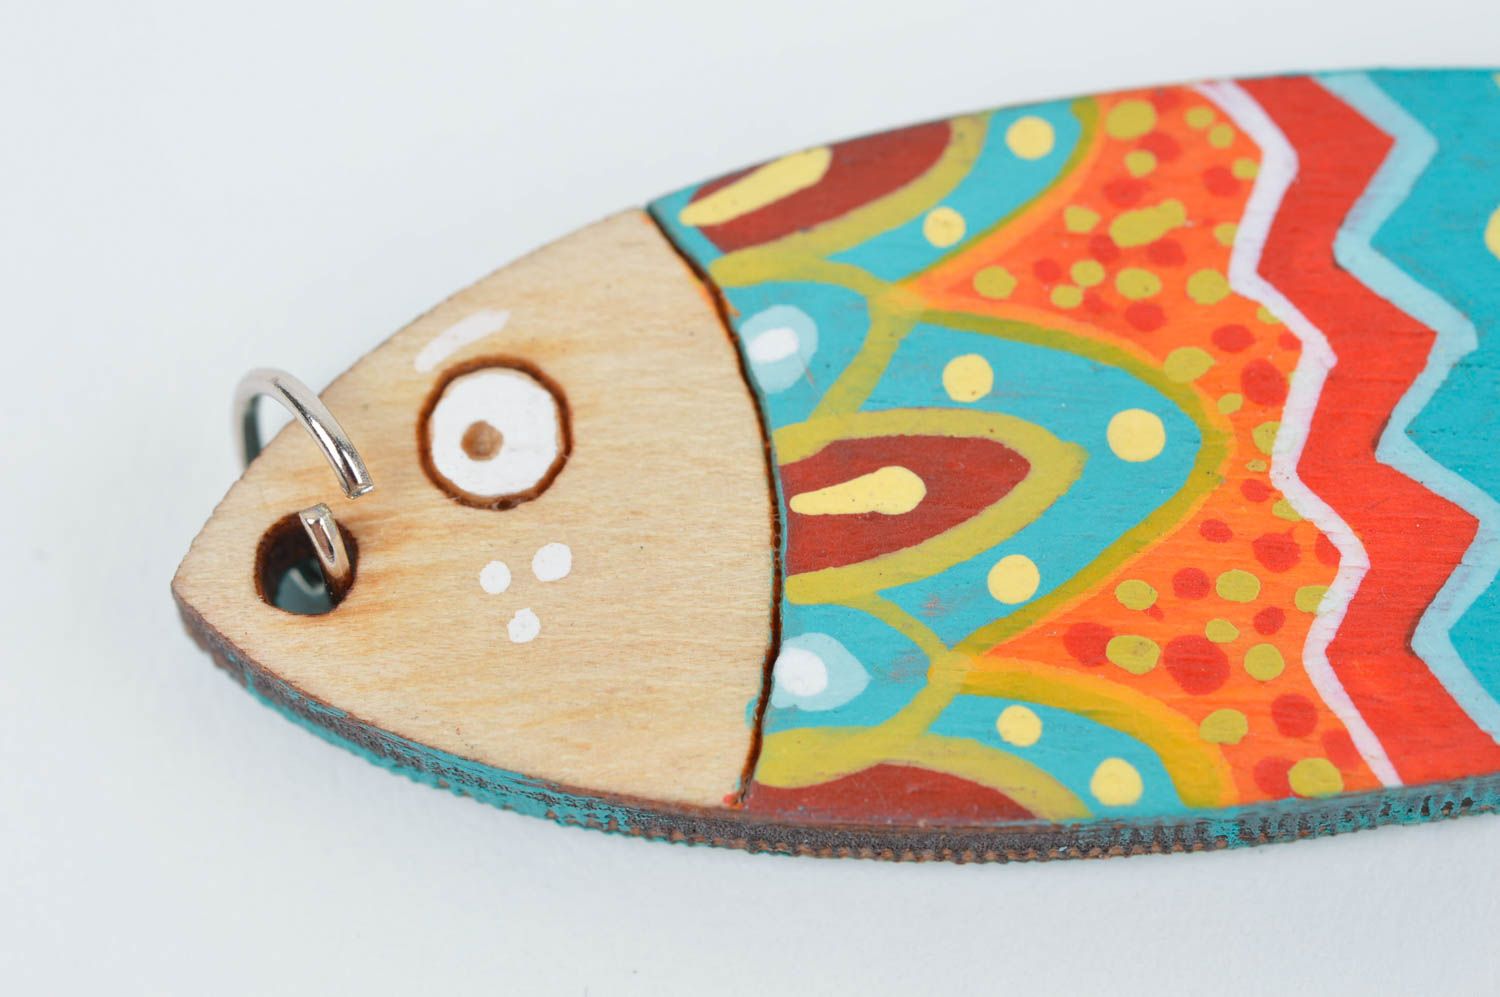 Unusual handmade wooden pendant wooden keychain jewelry findings craft supplies photo 5